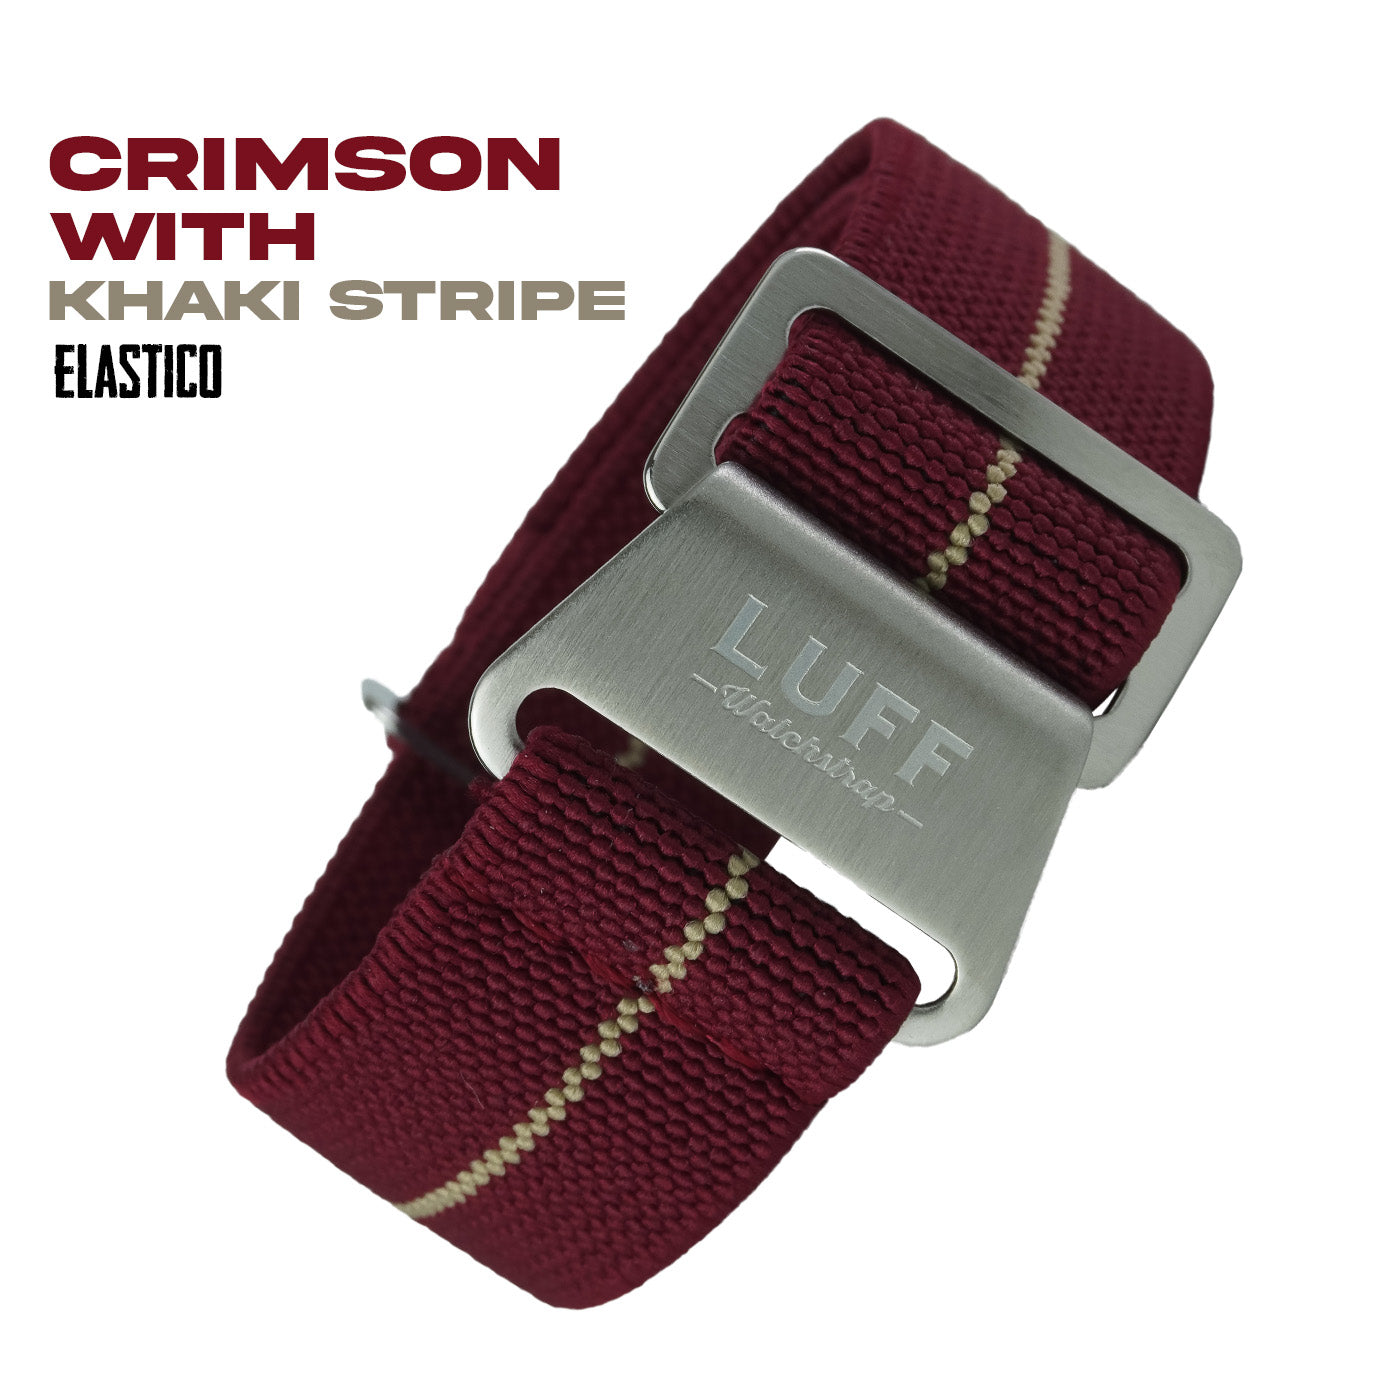 Crimson with Khaki Stripe - Elastico (6904191516759)